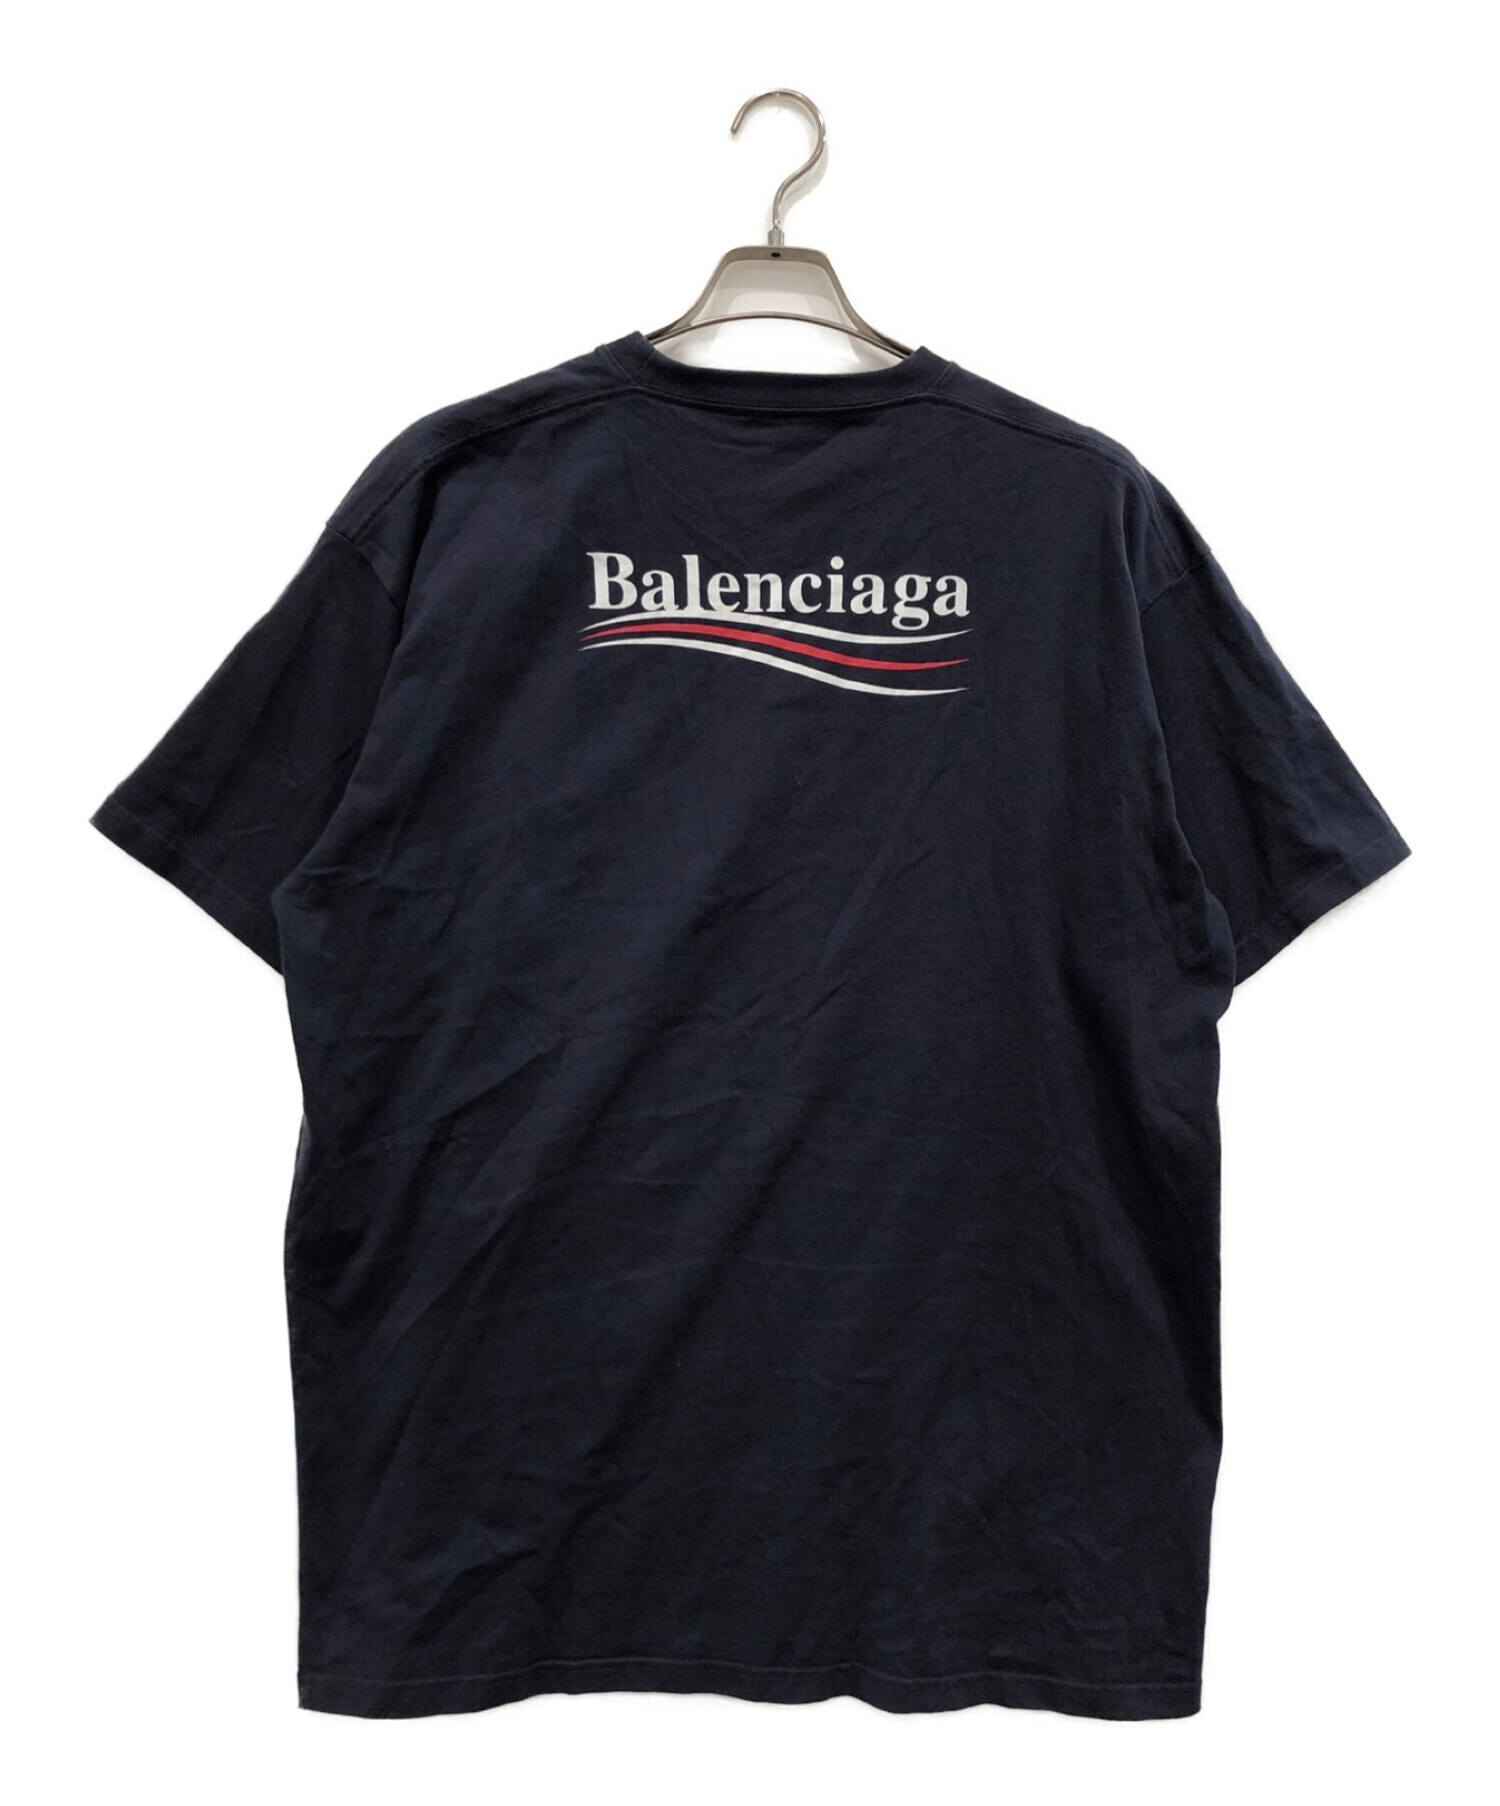 BALENCIAGA (バレンシアガ) キャンペーンロゴTシャツ ネイビー サイズ:S